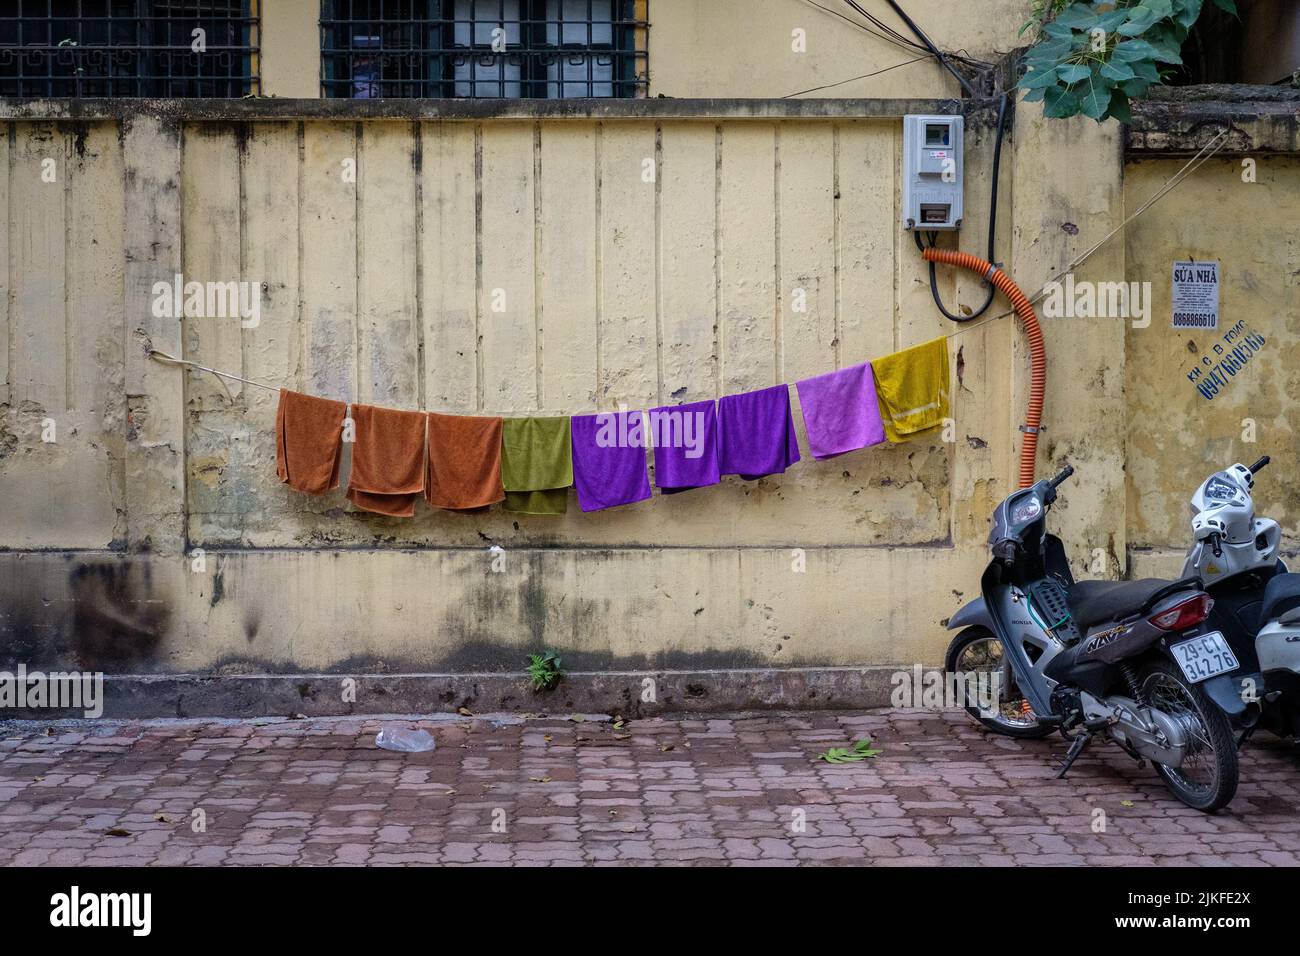 HANOI, VIETNAM - JANUARY 5, 2020: Laundry hanging to dry in the streets of Hanoi, Vietnam on January 5, 2020. Stock Photo